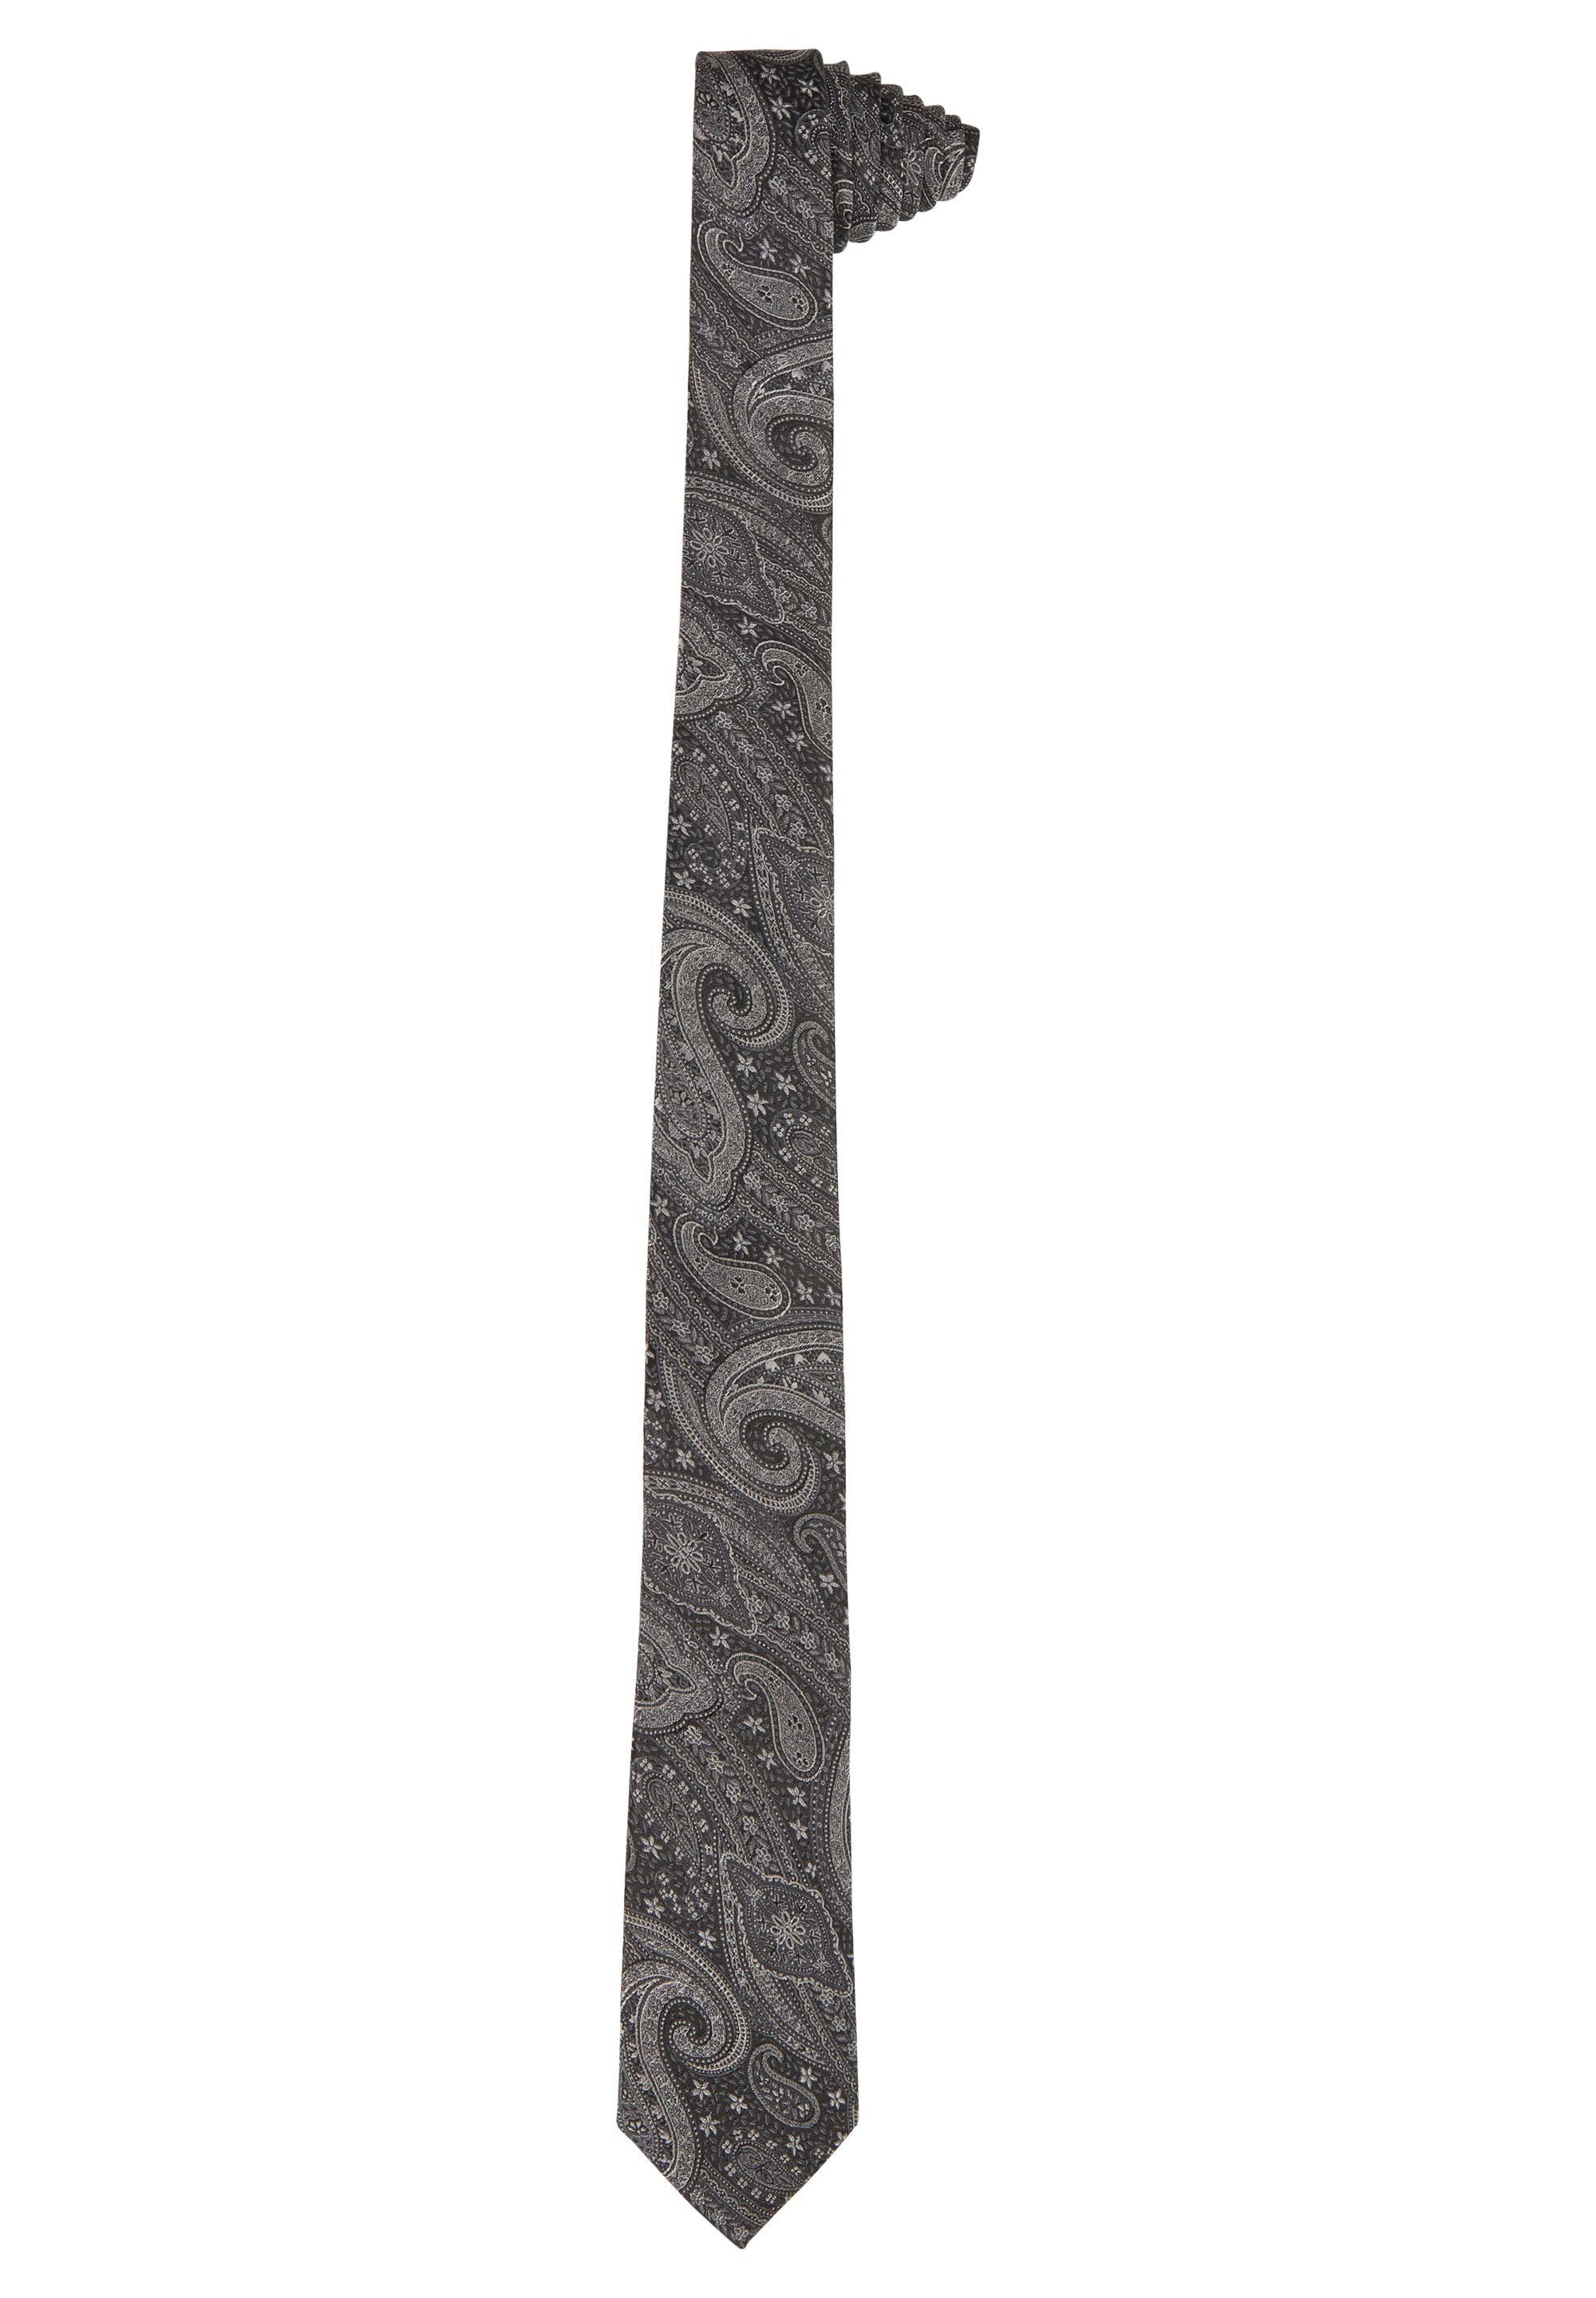 HECHTER PARIS mit Krawatte Paisley-Muster graphite